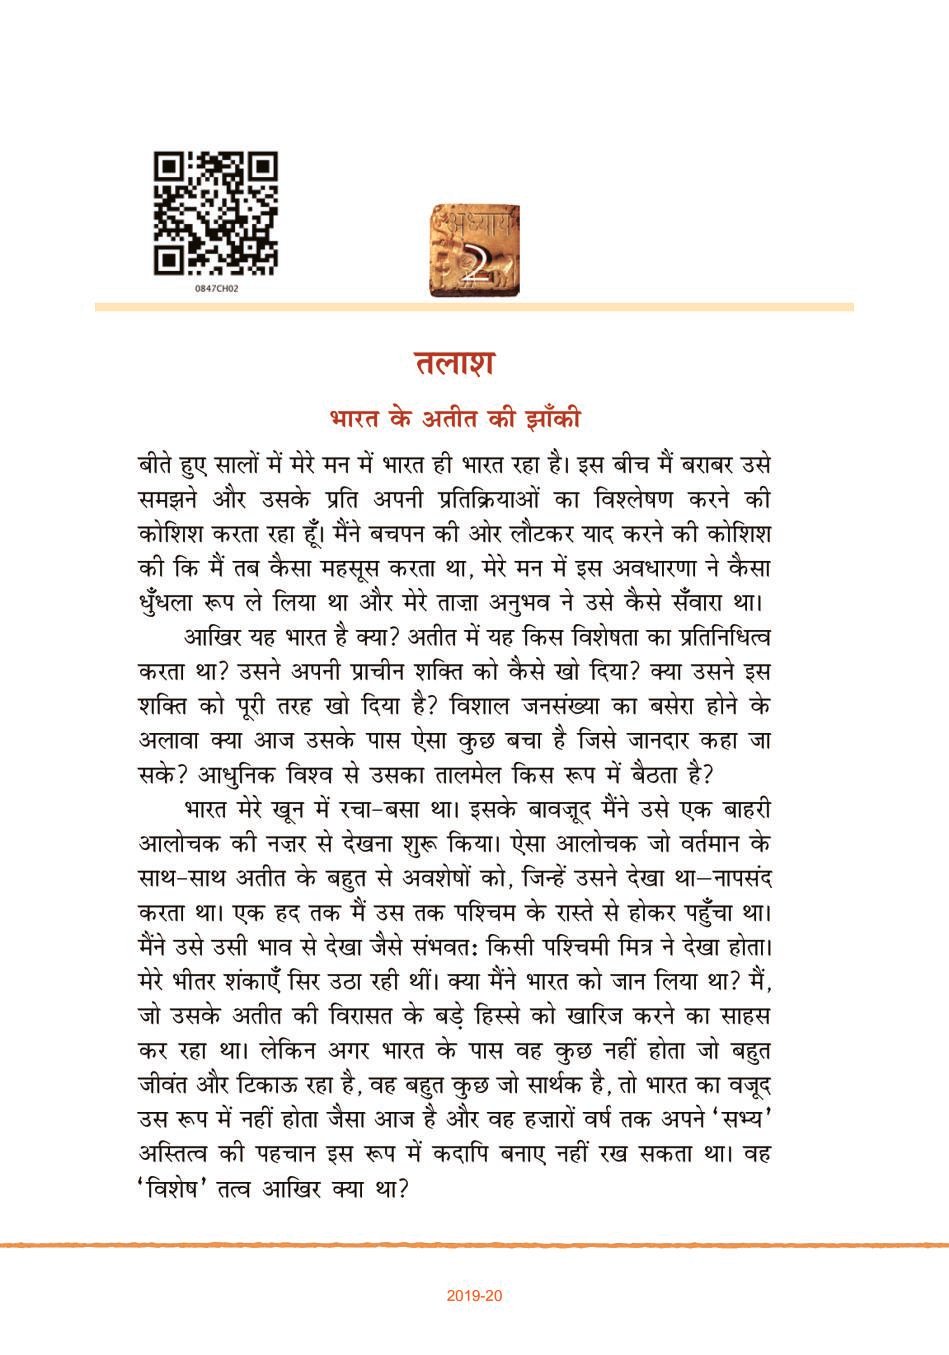 NCERT Book Class 8 Hindi (भारत की खोज) Chapter 2 तलाश - Page 1